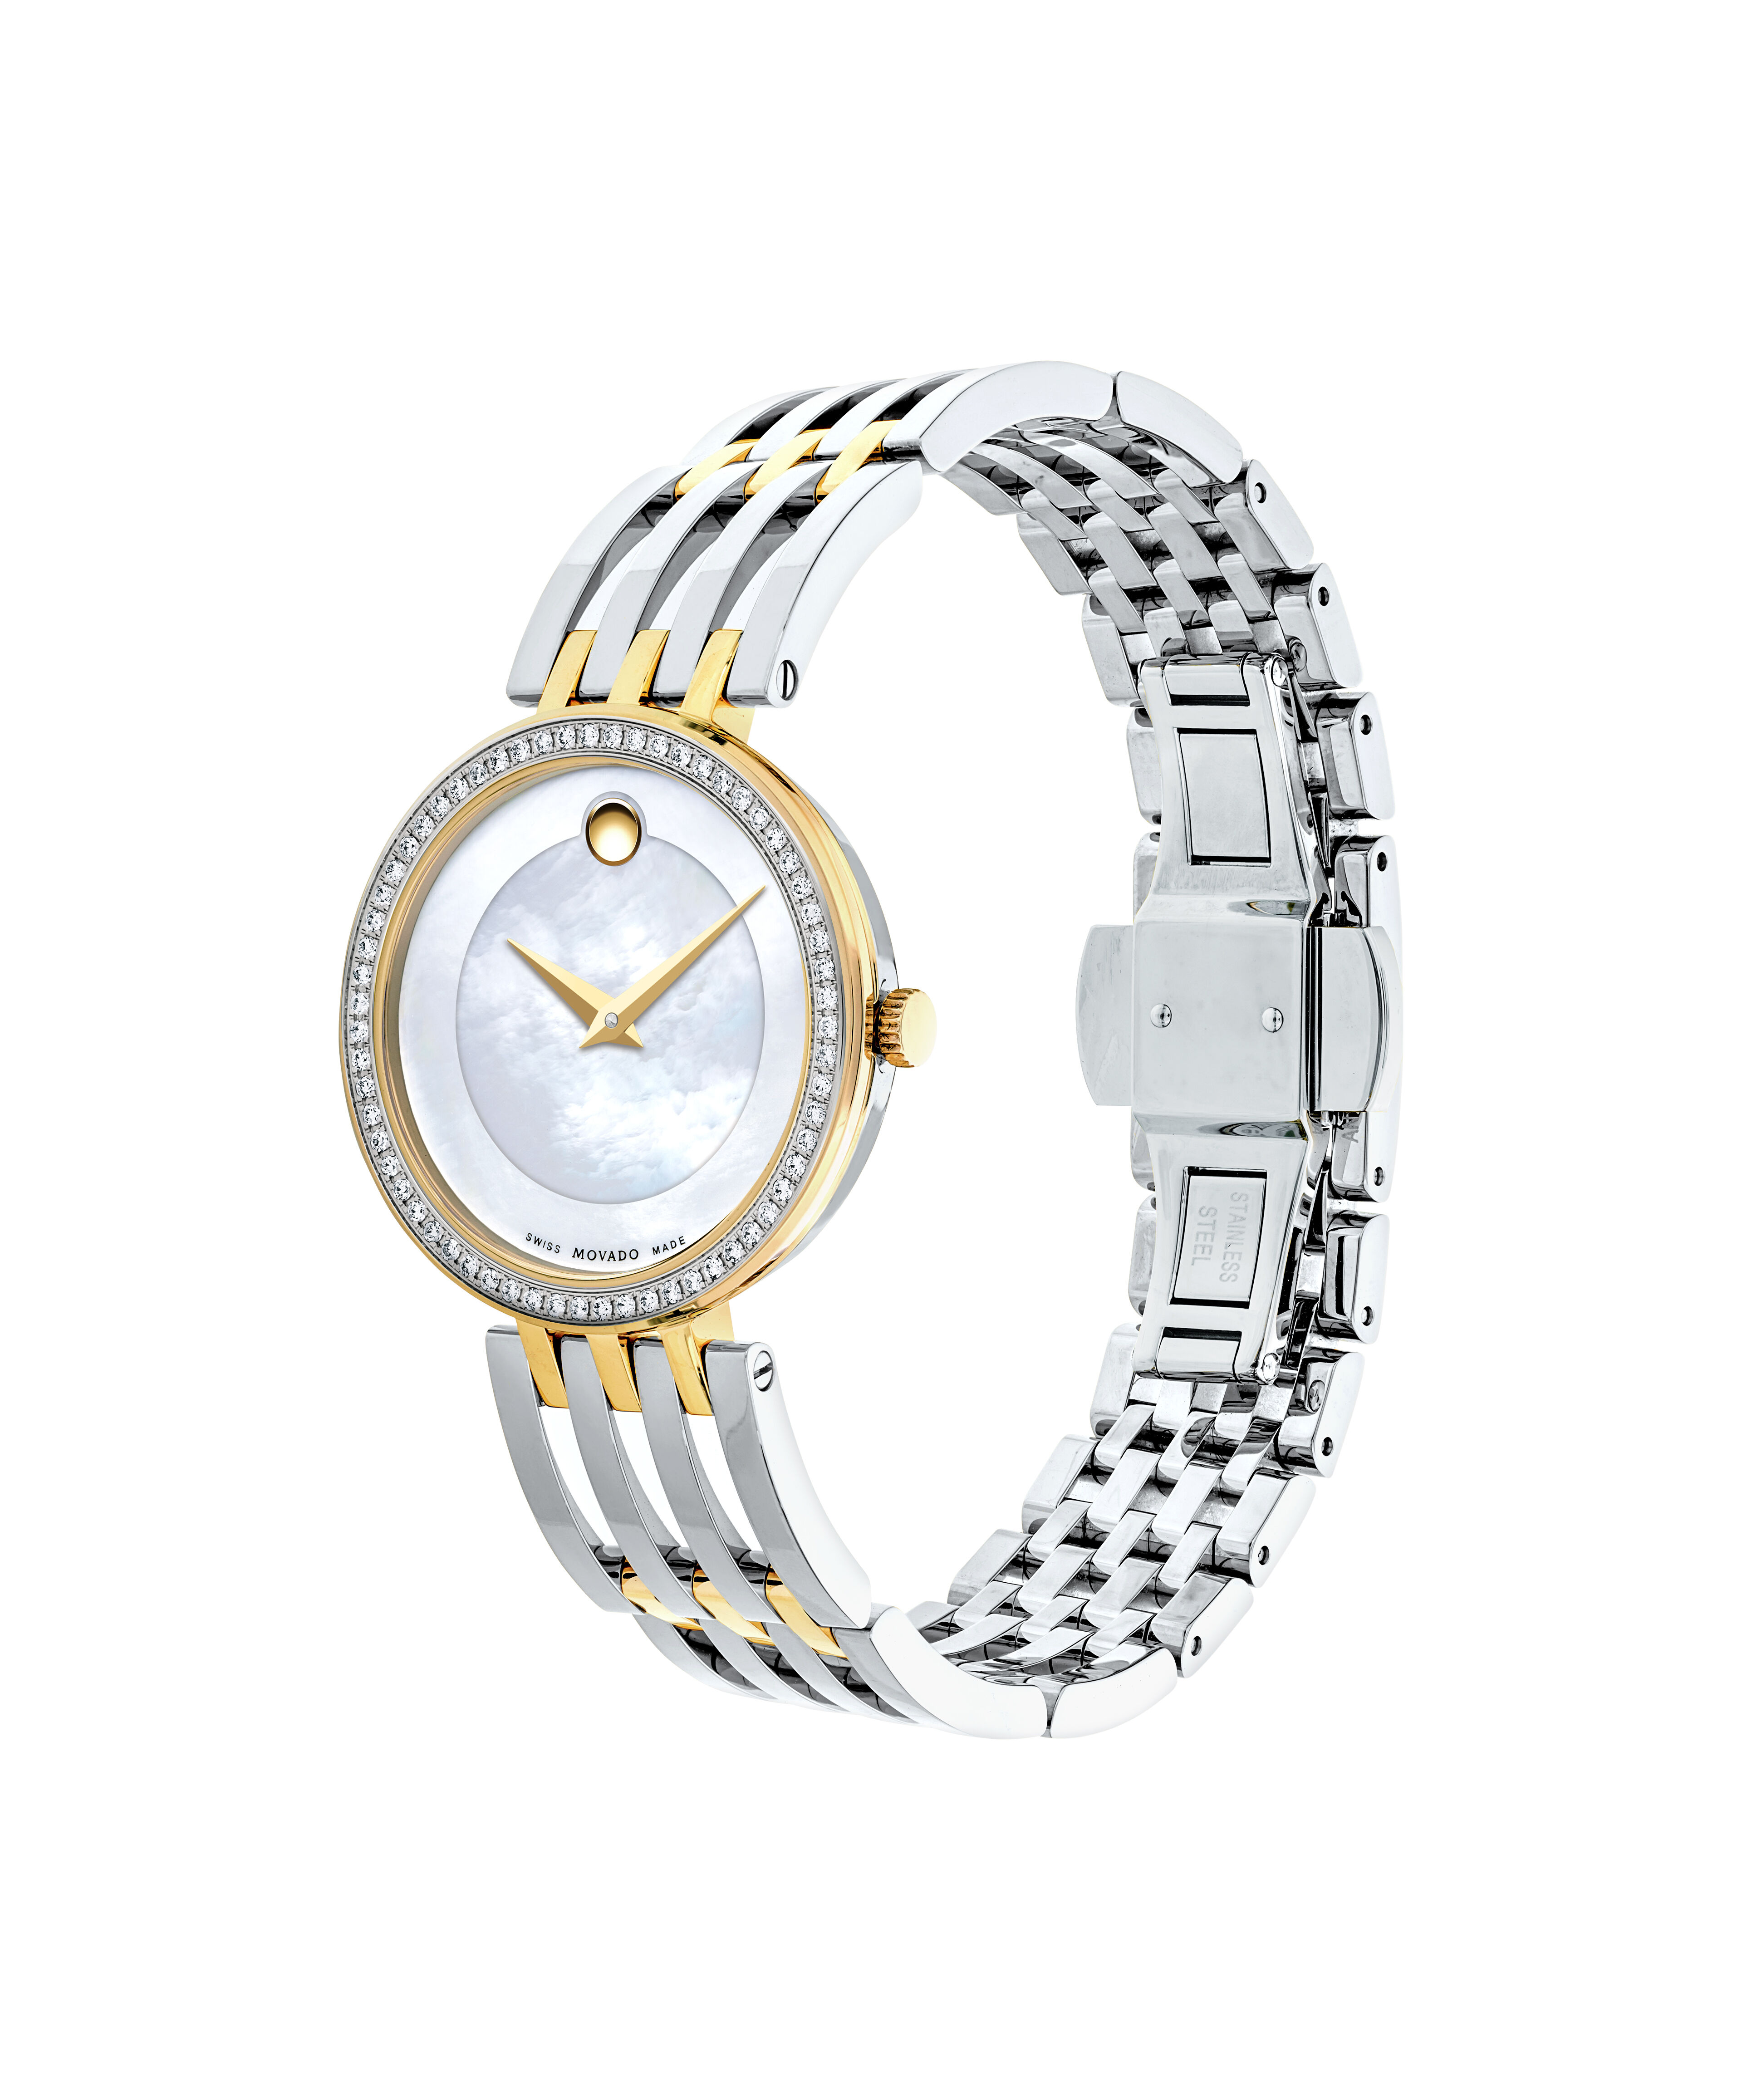 Omega Watch Replica Information